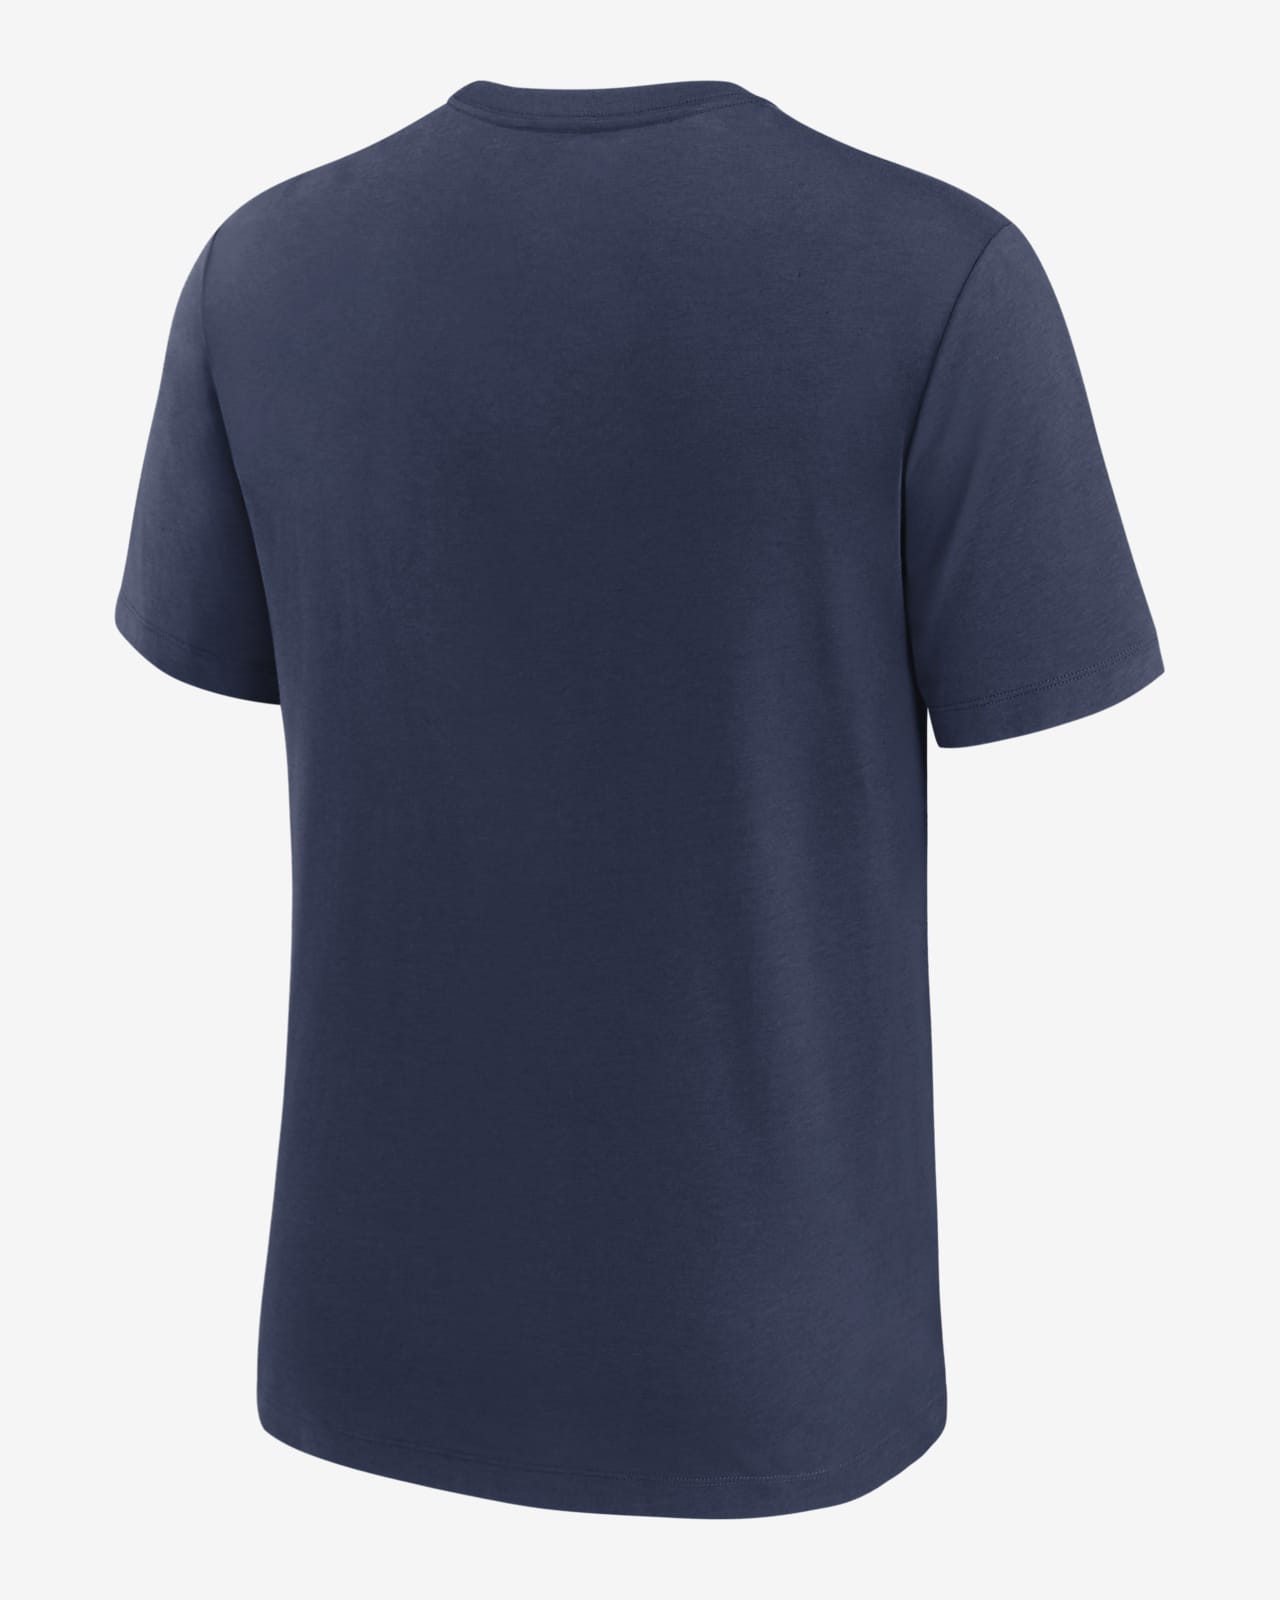 Nike Rewind Retro (MLB Detroit Tigers) Men's T-Shirt.